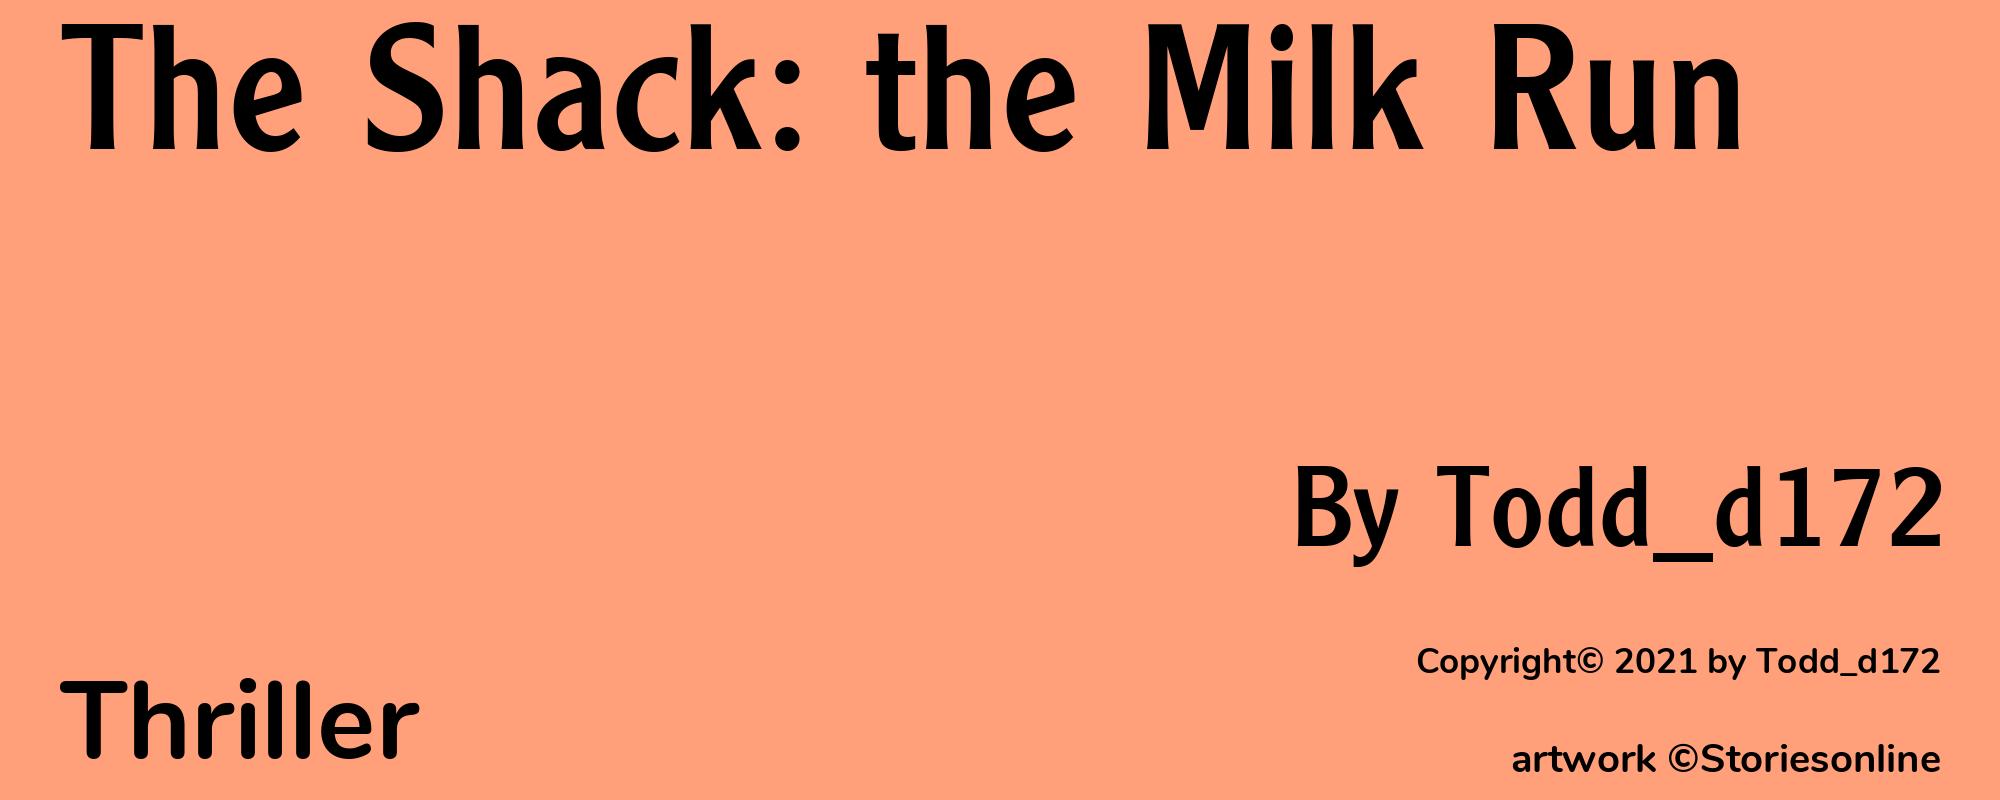 The Shack: the Milk Run - Cover